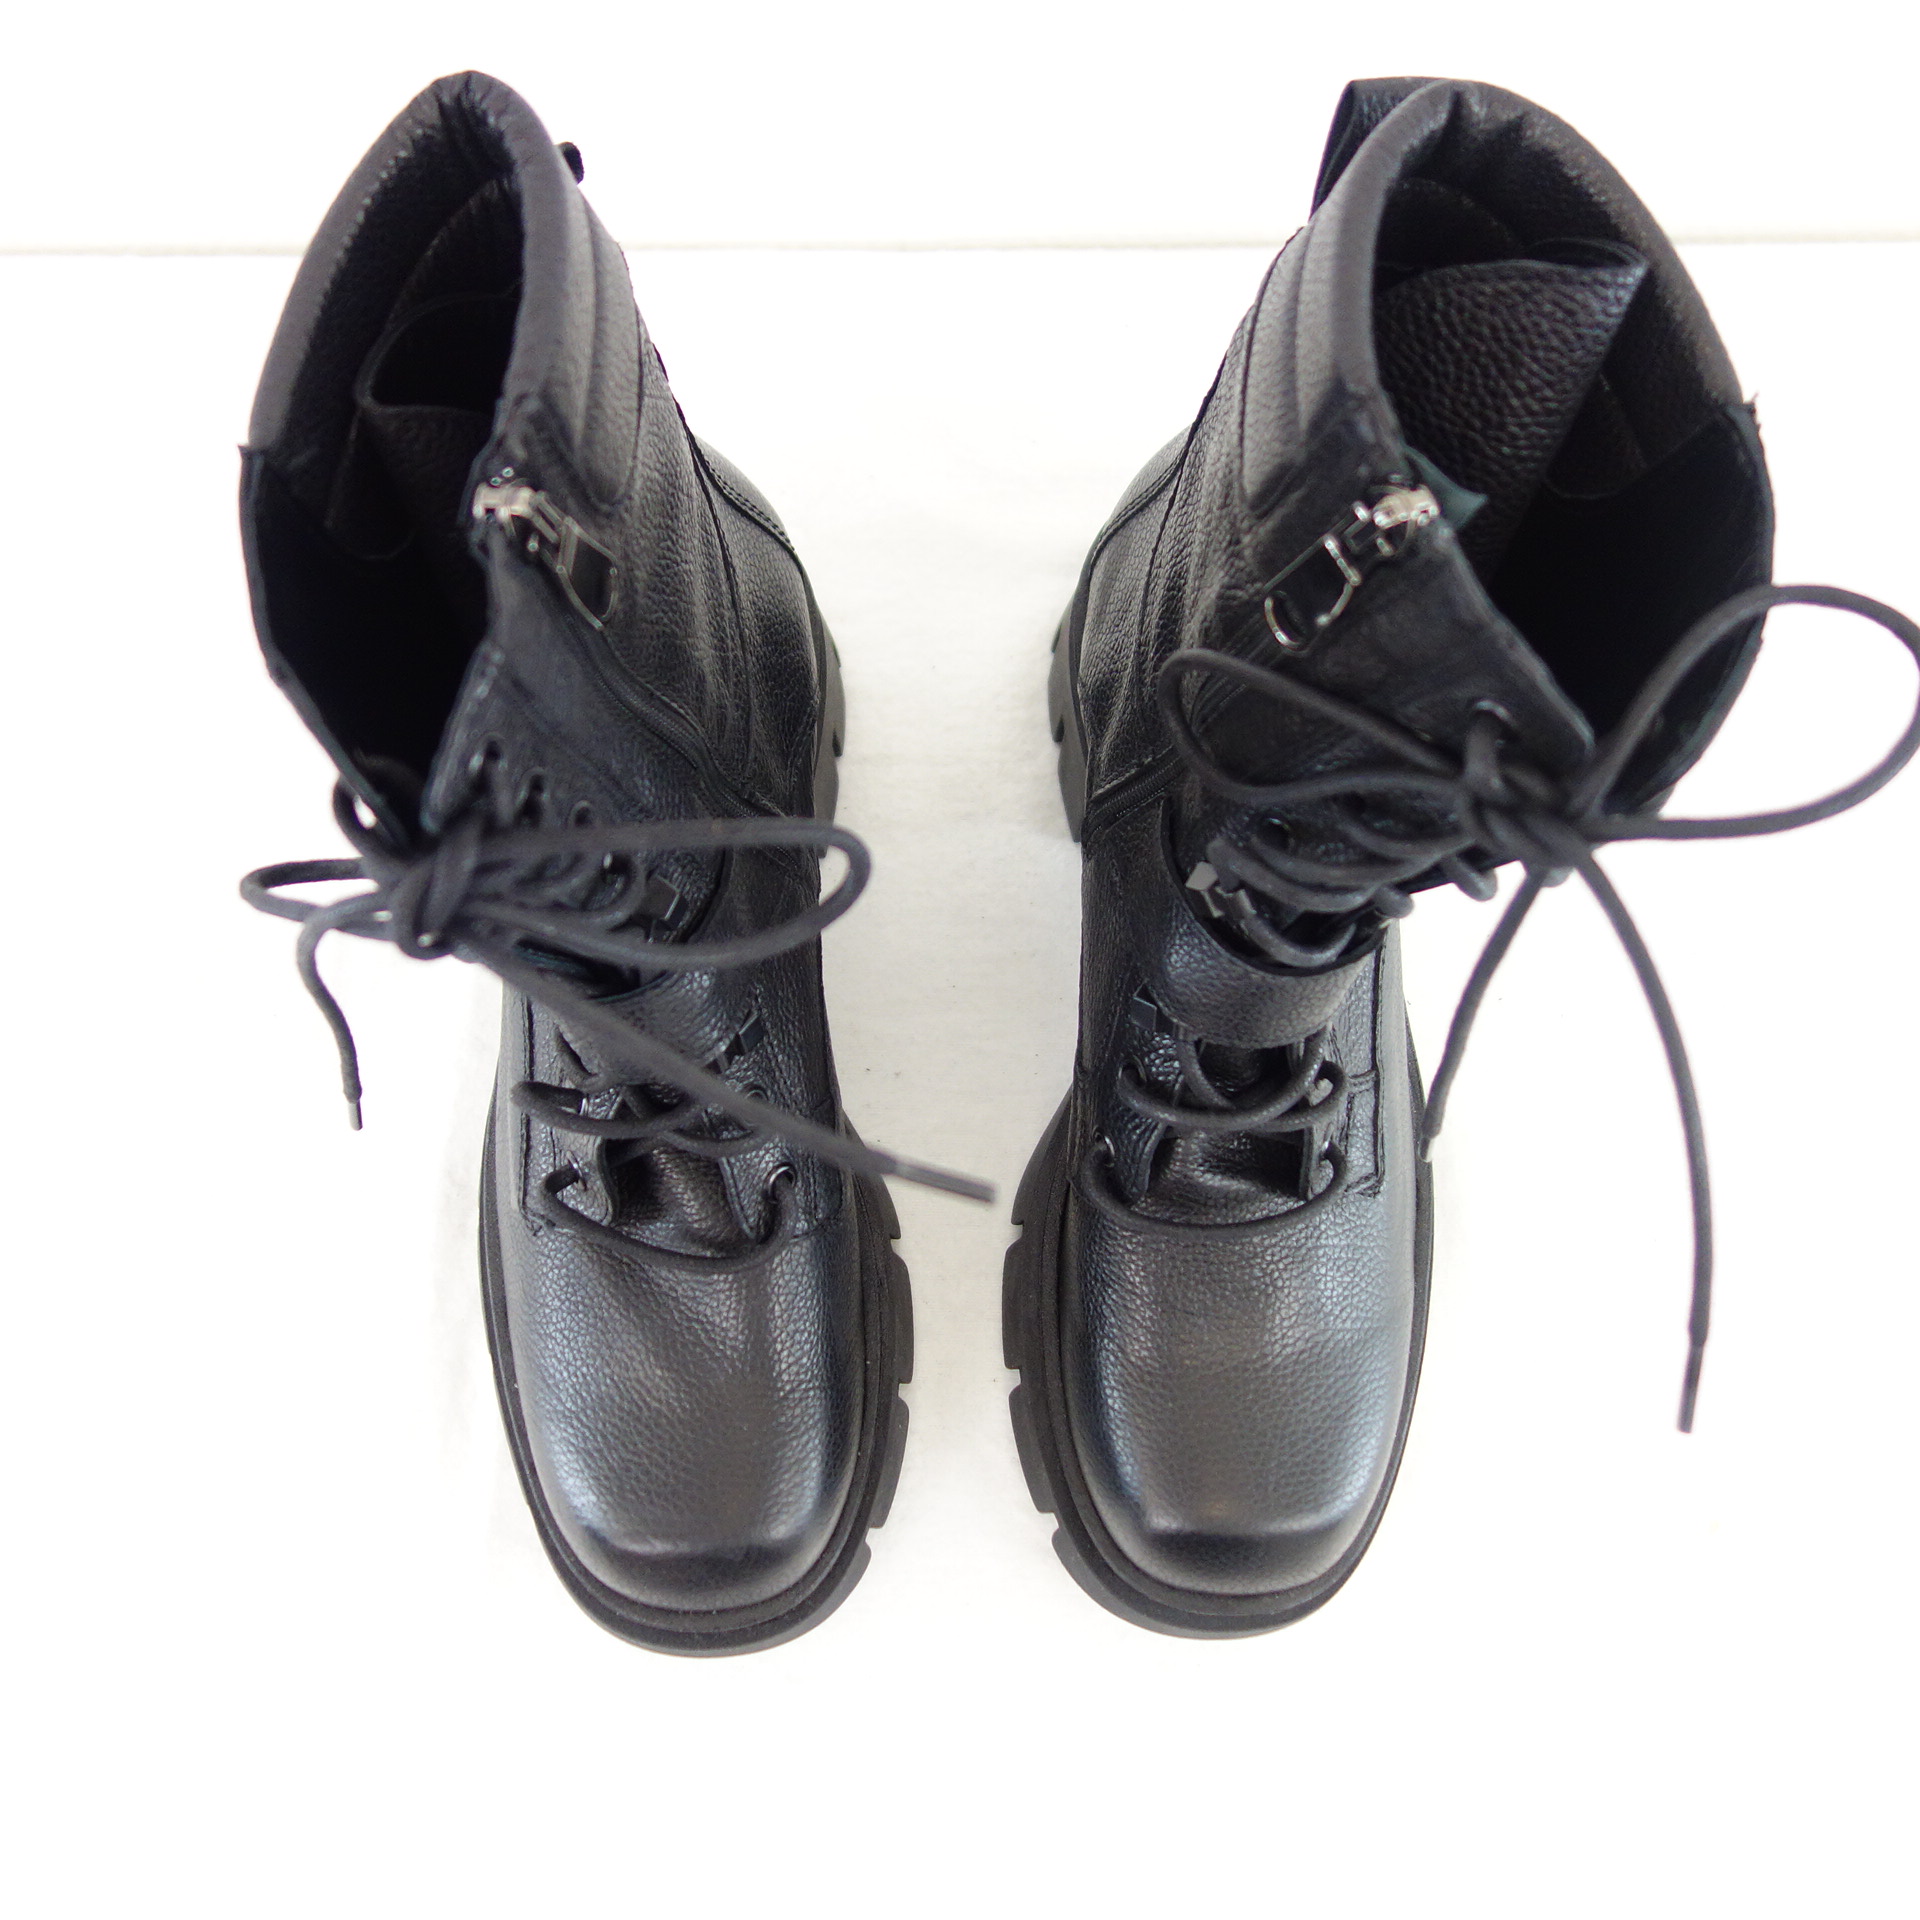 BUKELA Damen Schuhe Stiefel Stiefeletten Biker Boots Leder Schwarz Gr 37